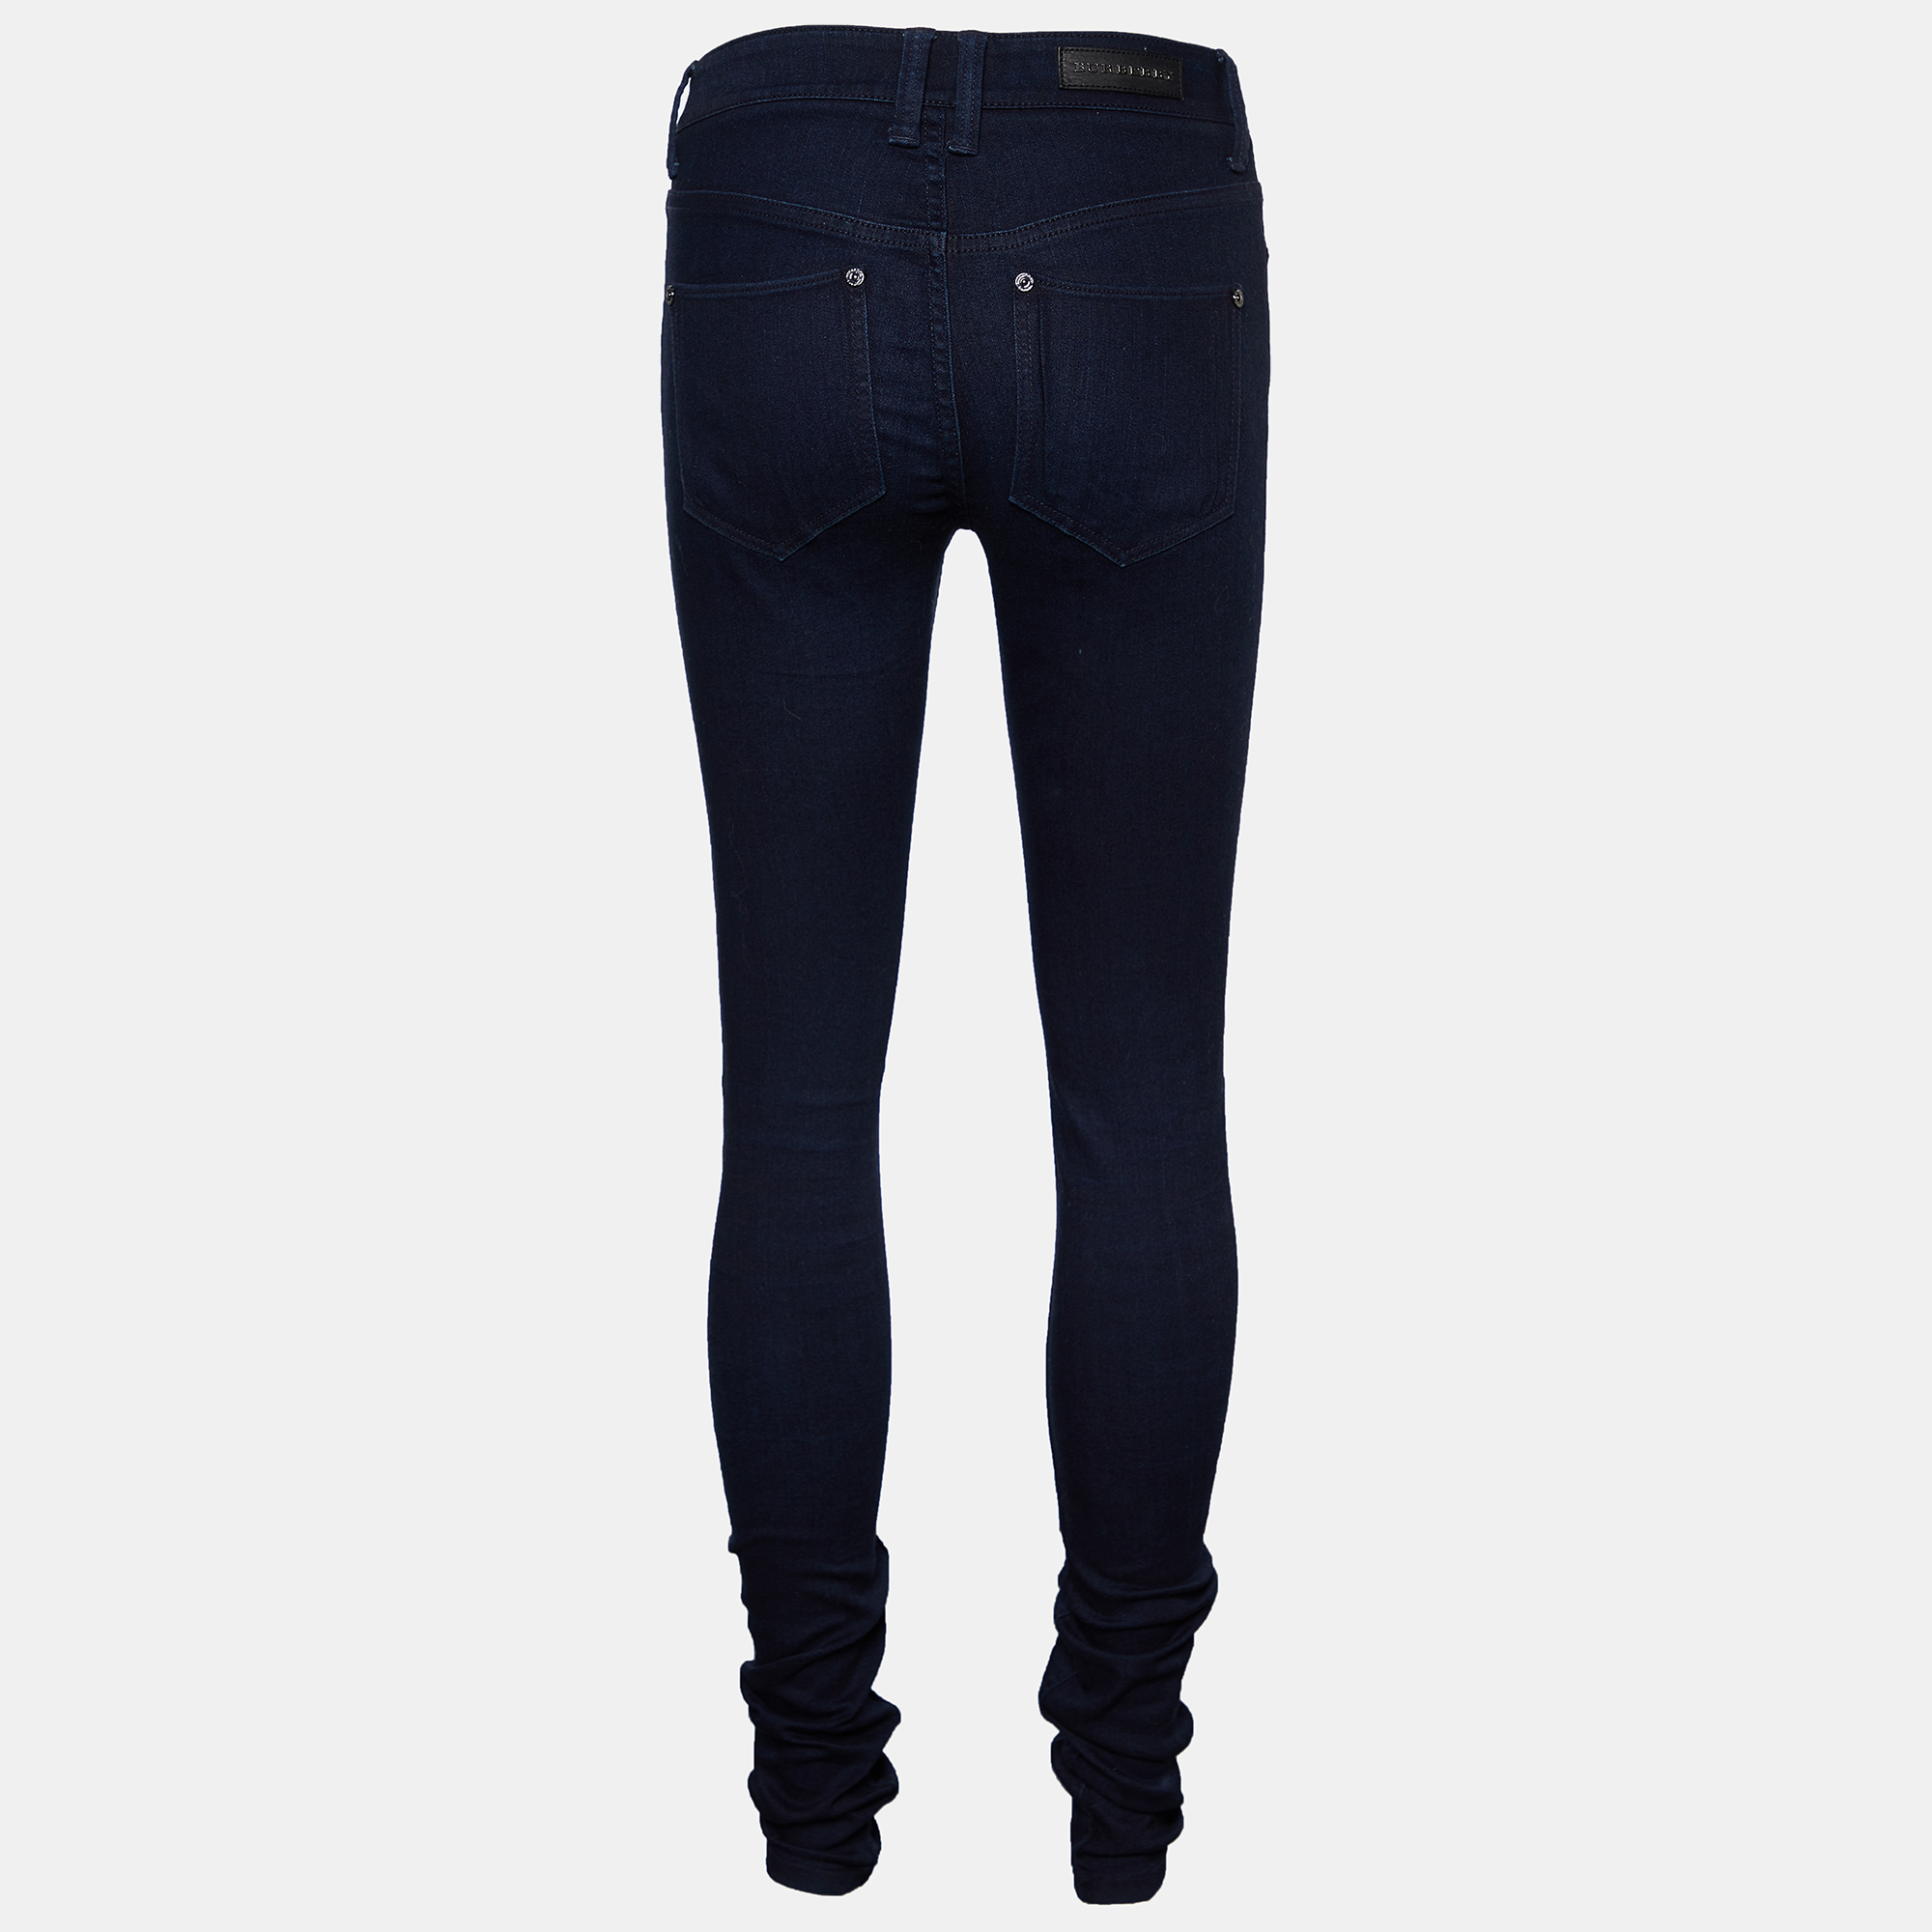  Burberry Navy Blue Denim Thurlestone Skinny Jeans S Waist 28